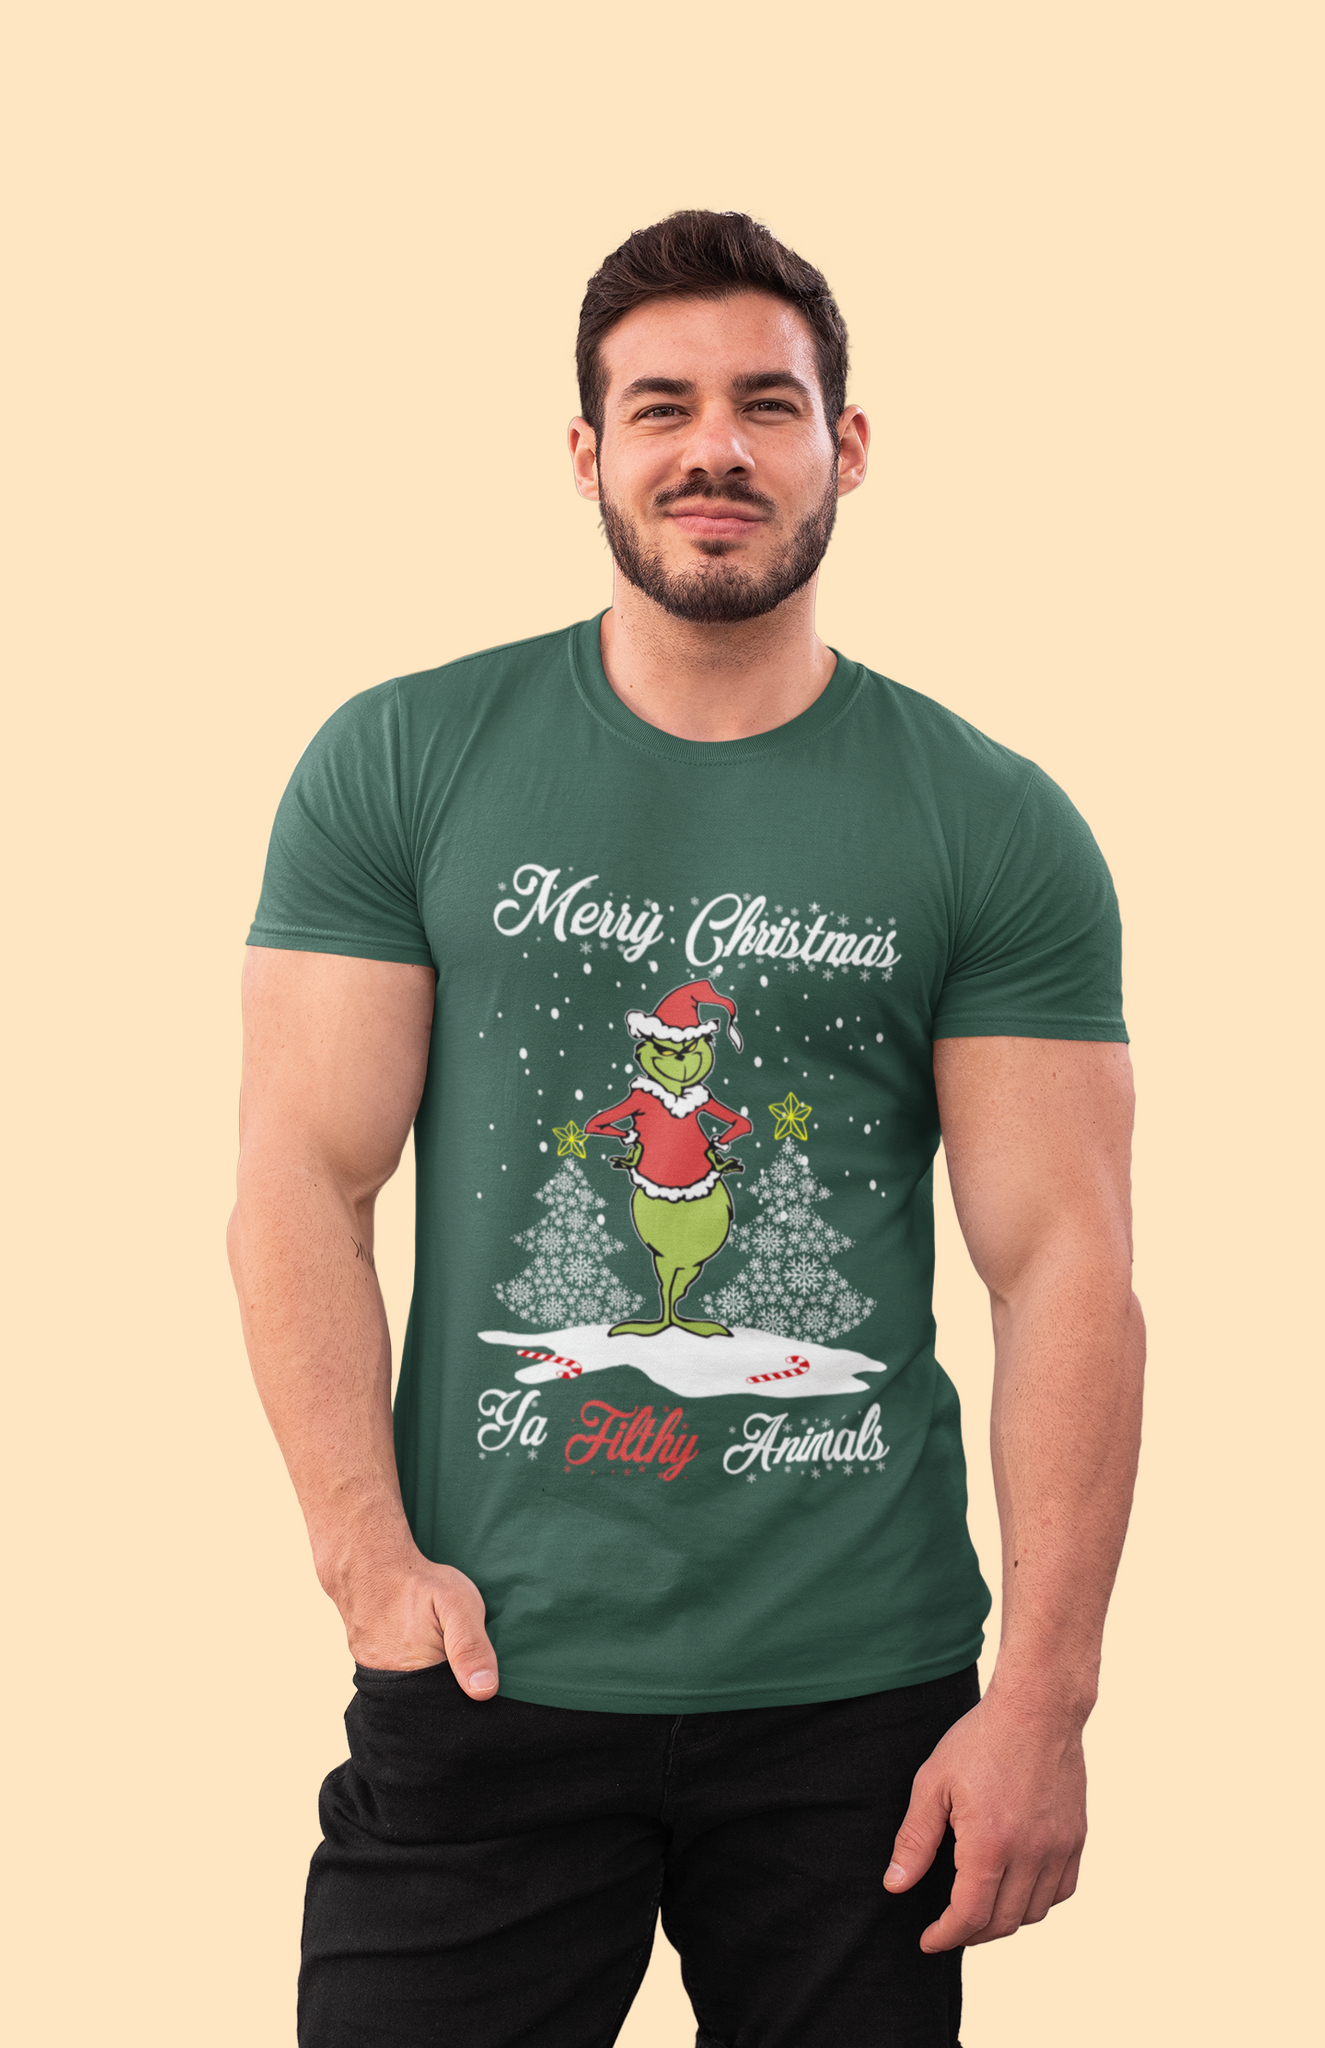 Grinch T Shirt, Merry Christmas Ya Filthy Animals Tshirt, Christmas Movie Shirt, Christmas Gifts